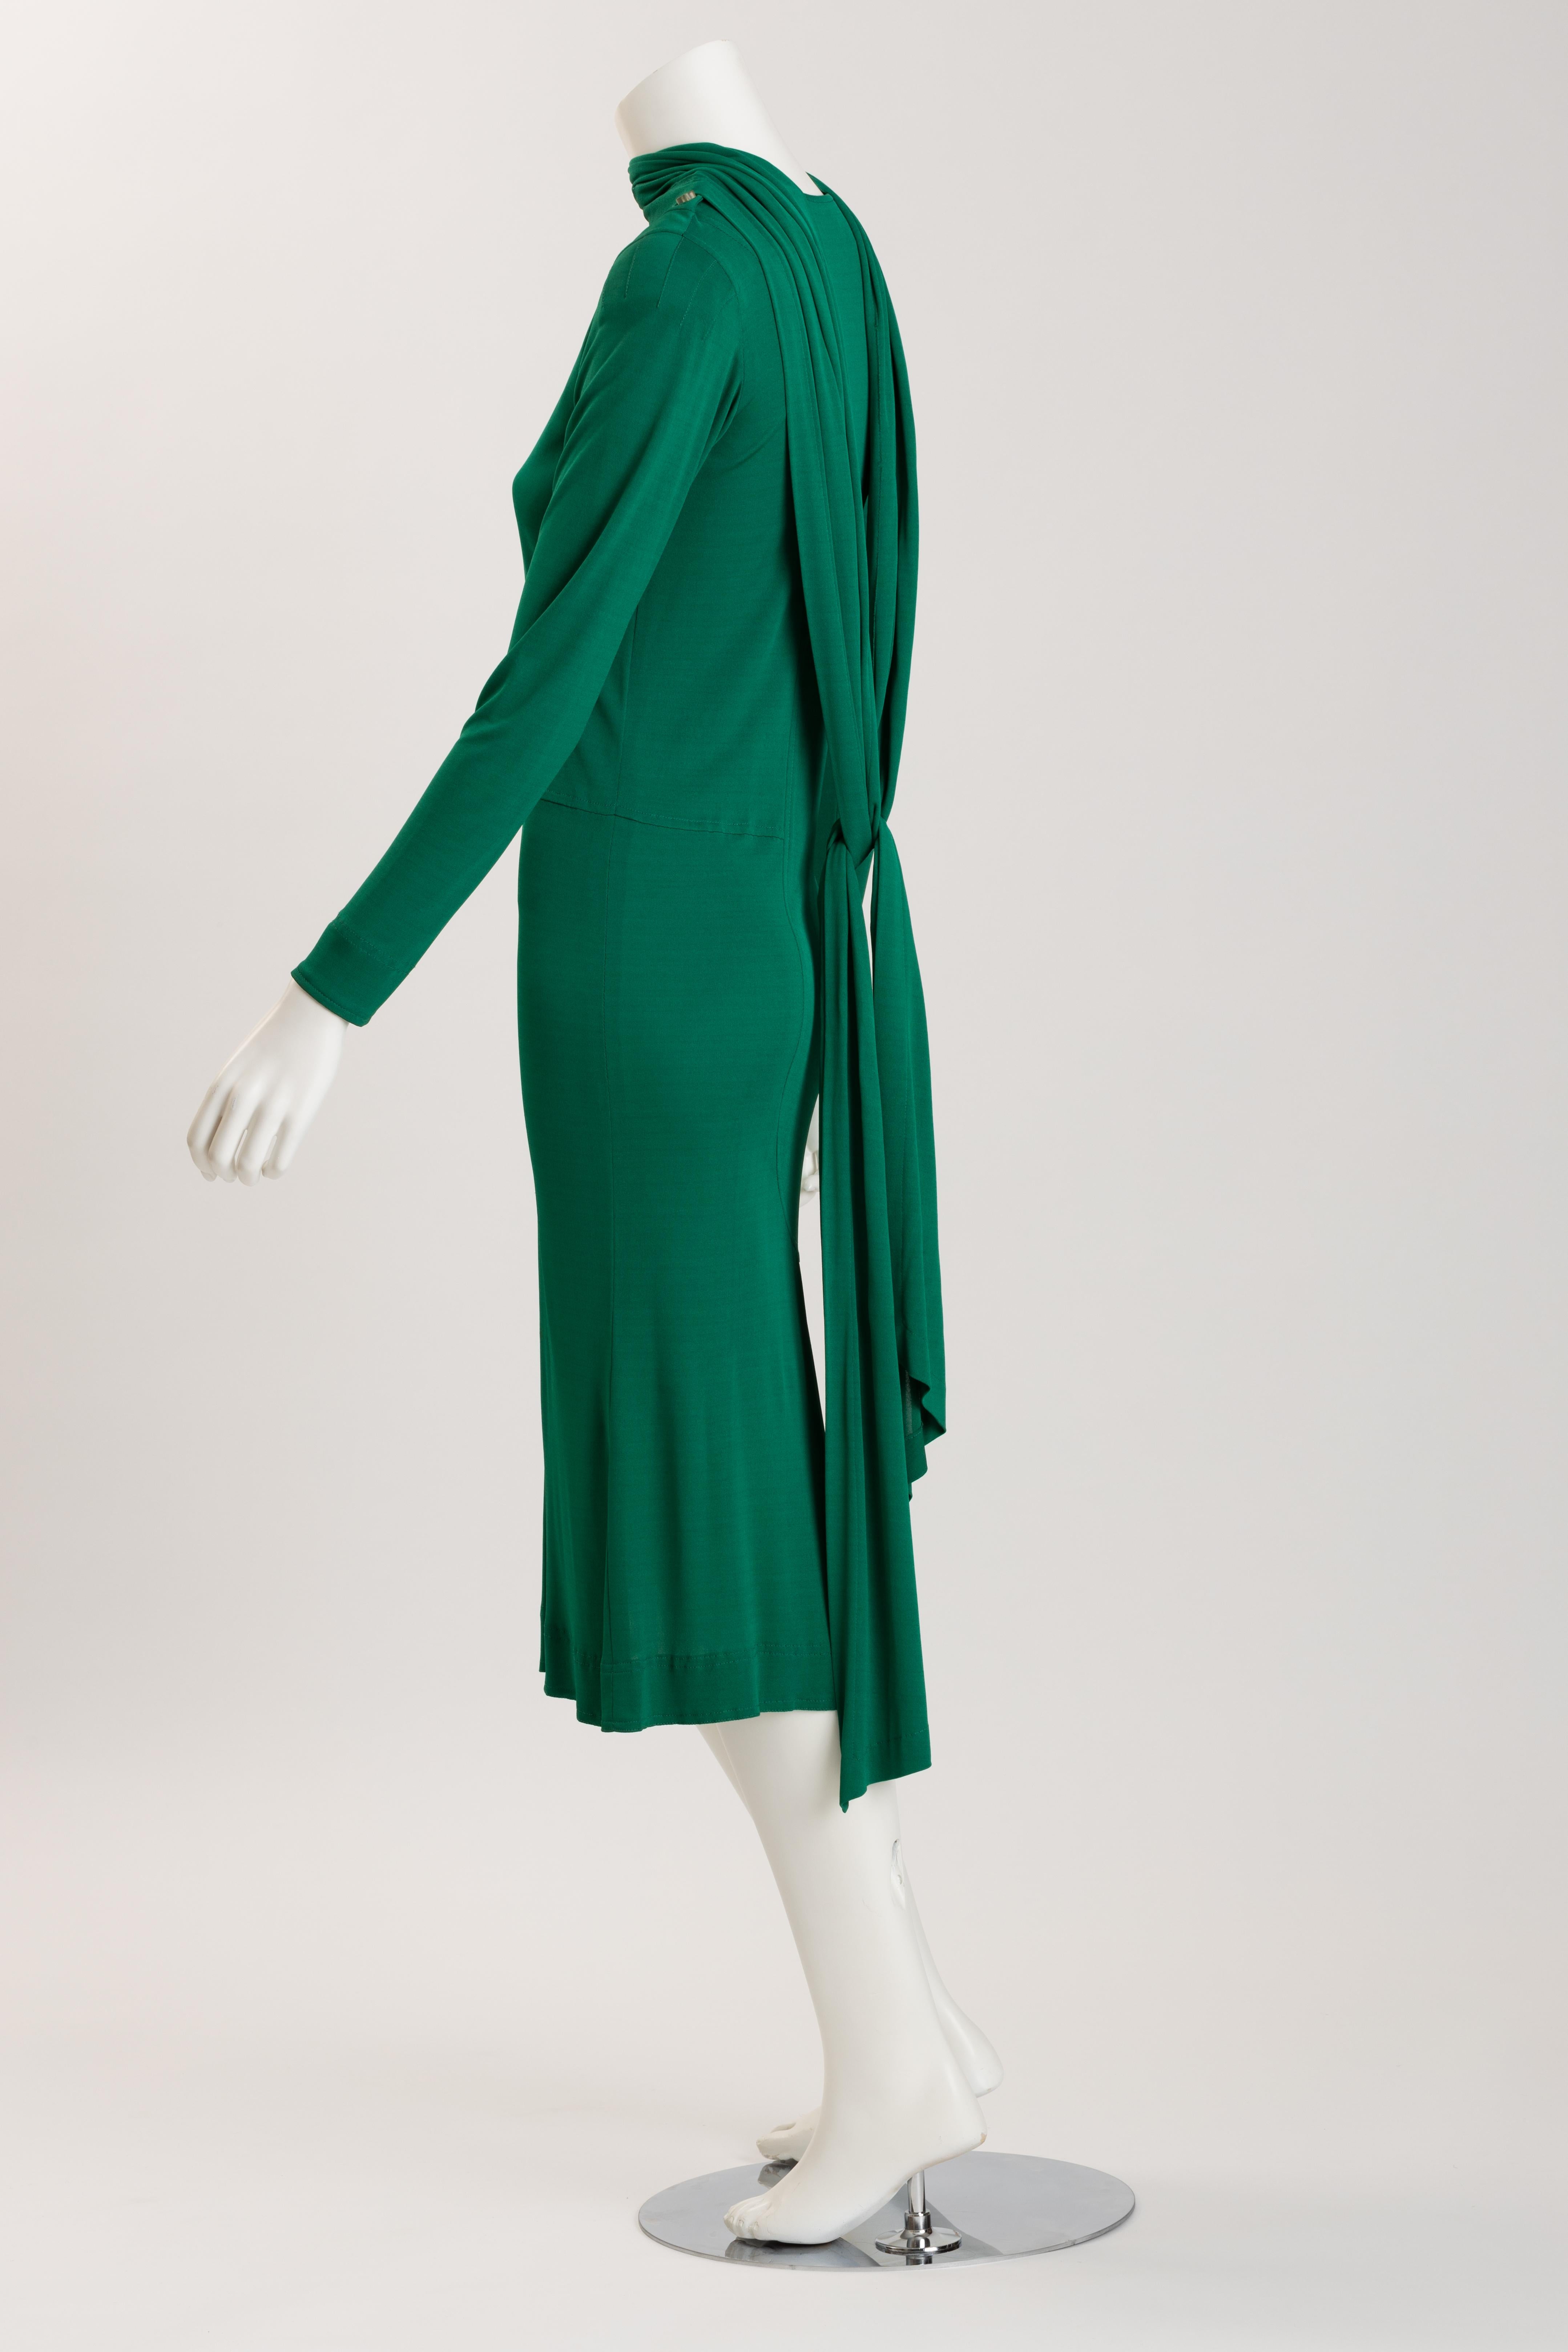 Jean Muir - Robe de cocktail en jersey de viscose vert émeraude en vente 2